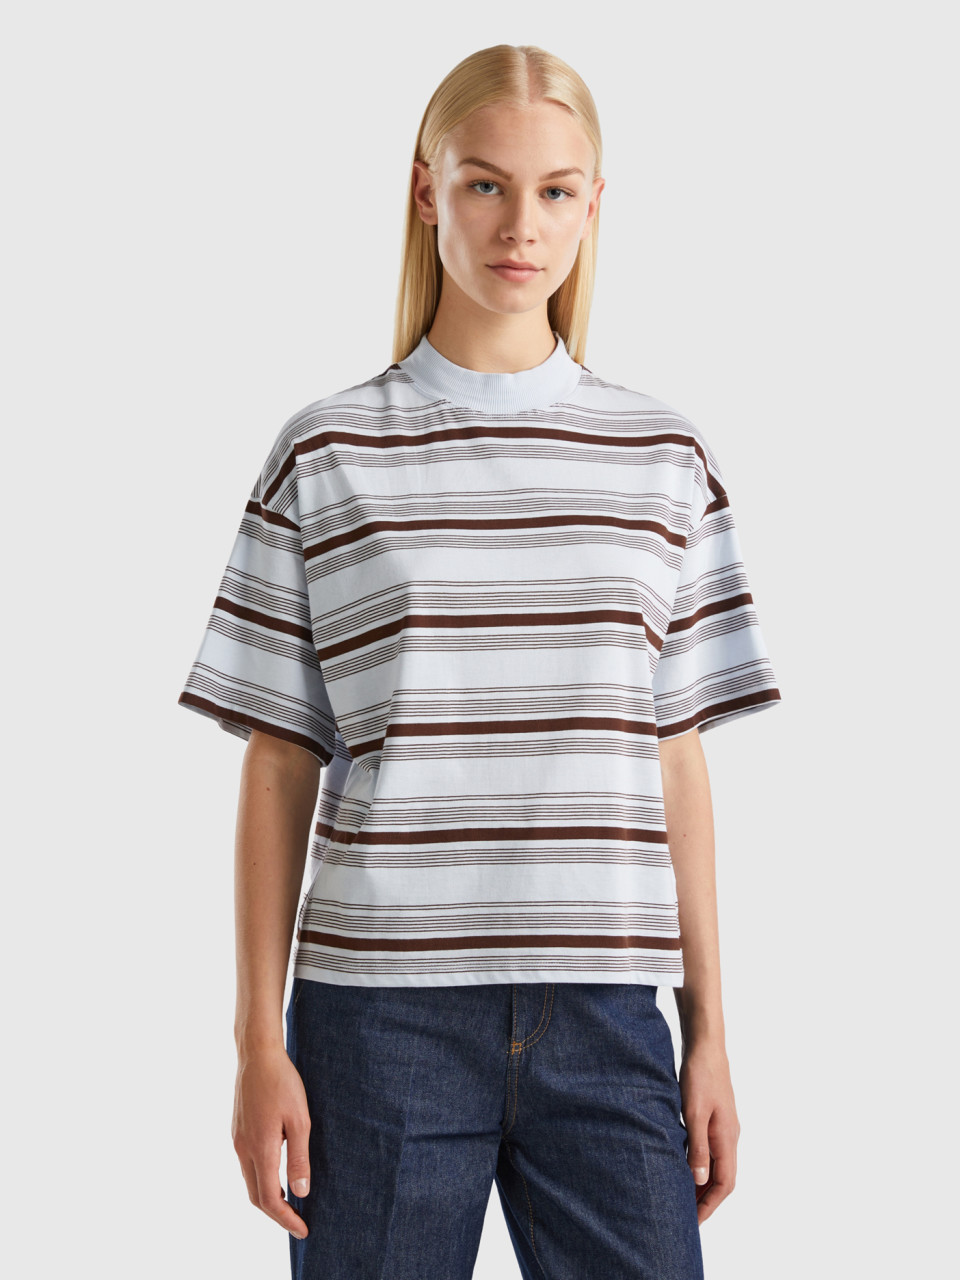 Benetton, Striped Turtleneck T-shirt, White, Women